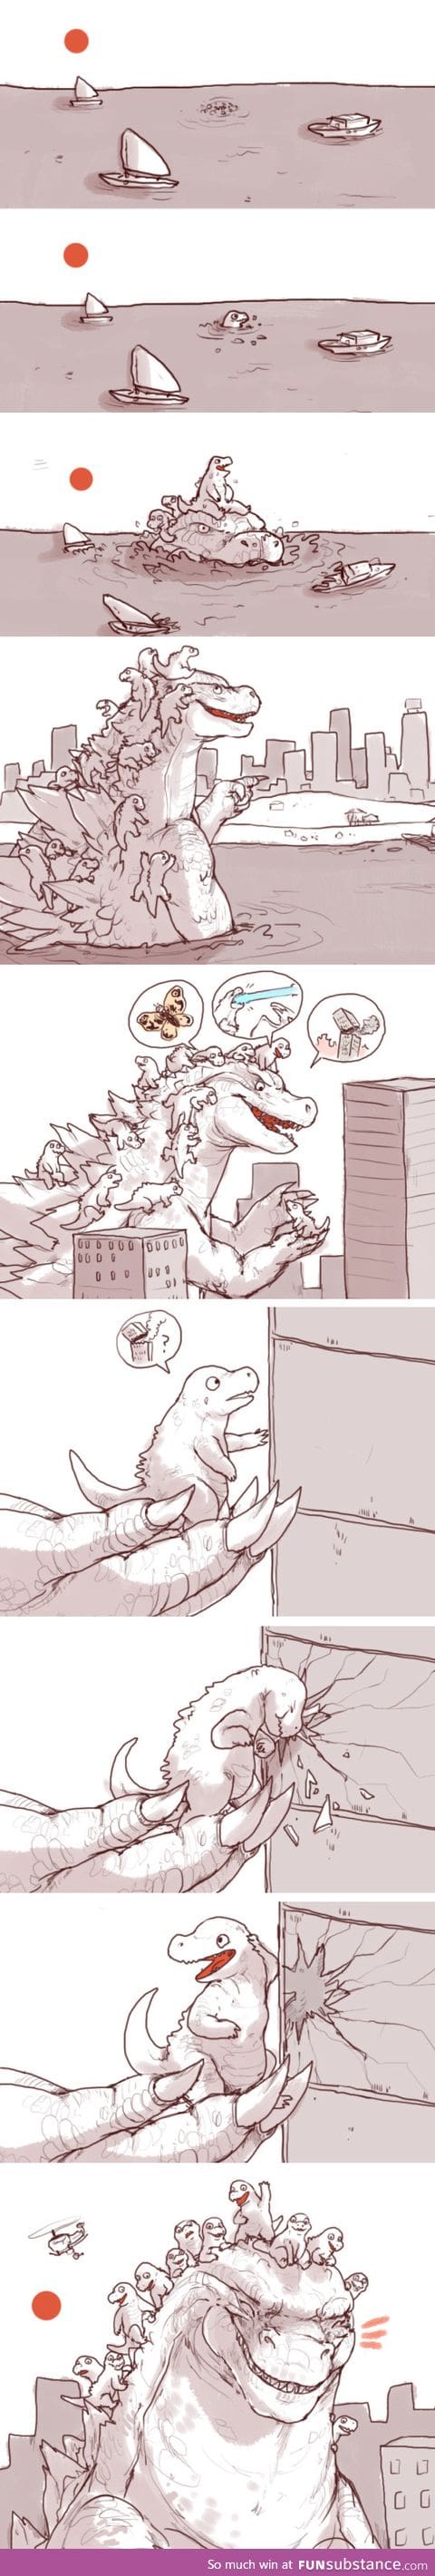 Godzilla's take your child to work day